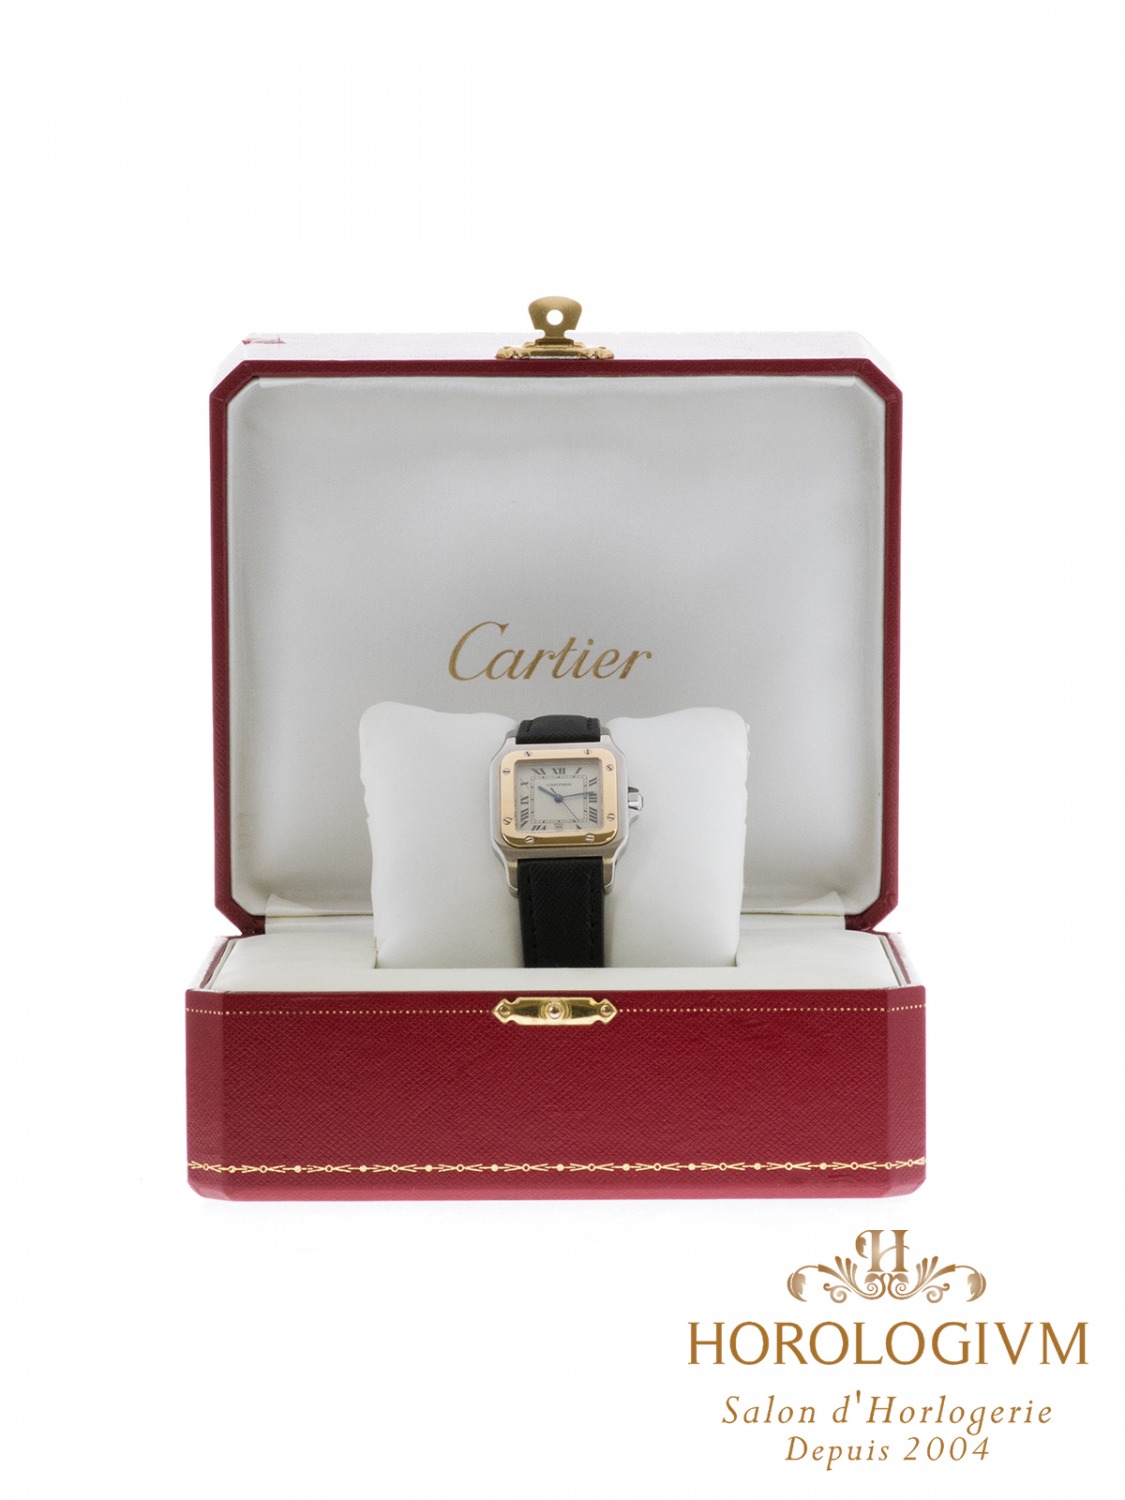 Cartier Santos de Cartier Galbee watch, silver (case) and yellow gold (bezel)